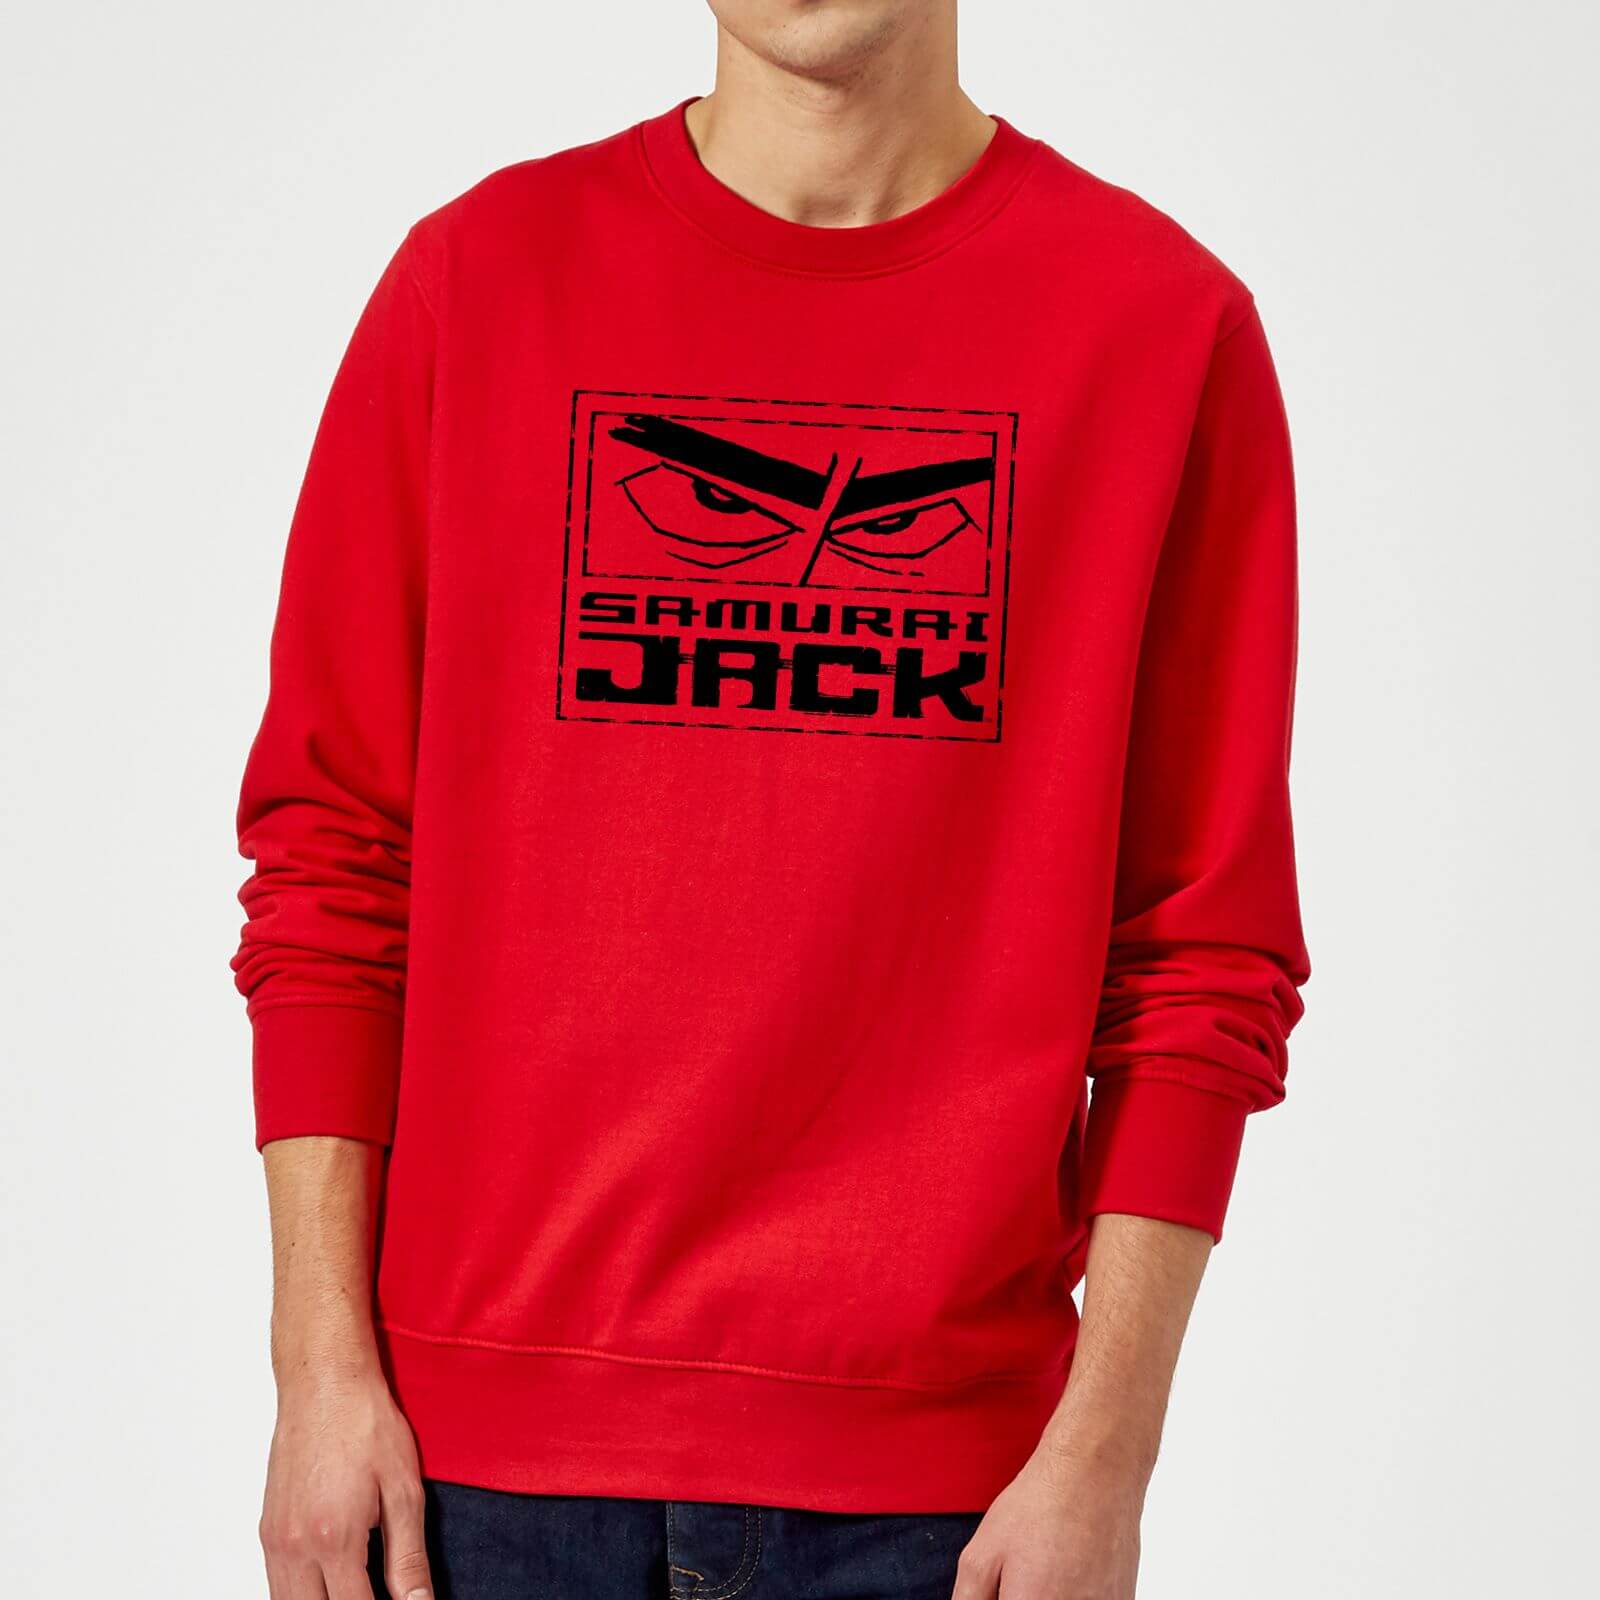 Samurai Jack Stylised Logo Sweatshirt - Red - M - Red